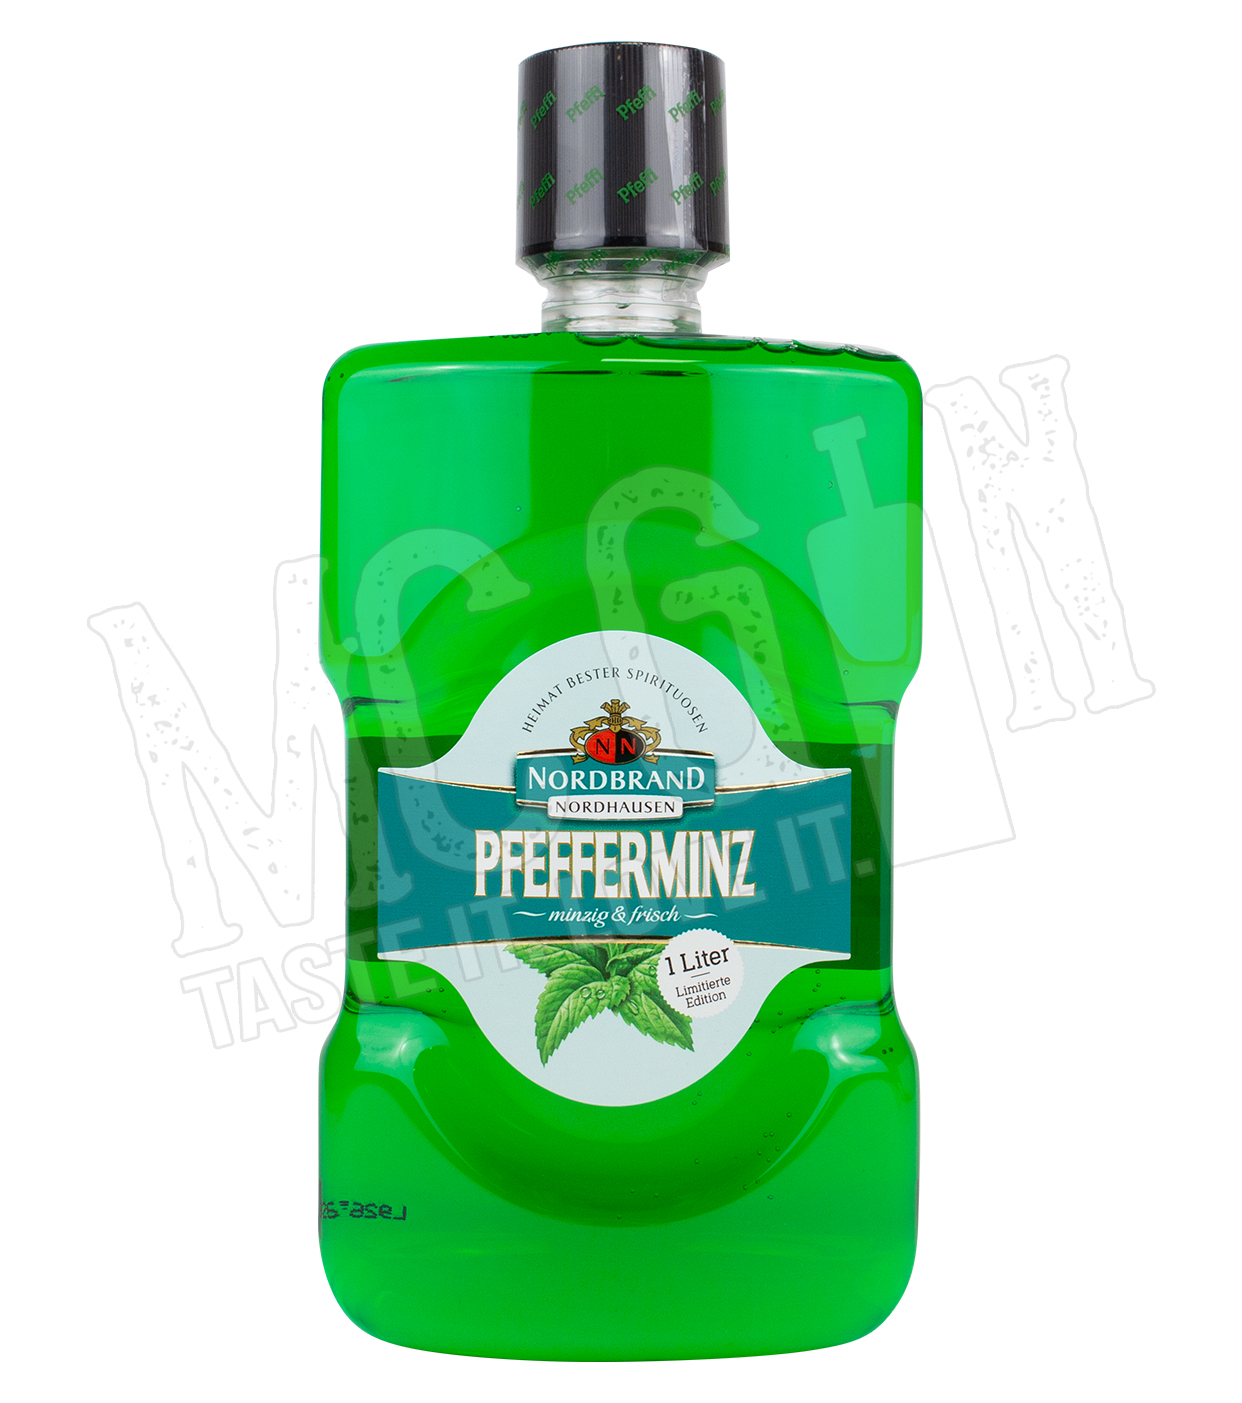 Nordbrand Pfefferminz Mundwasser PET - 1.0L - 18% | Likör Spirituosen |  McGin.de - Taste it, love it!